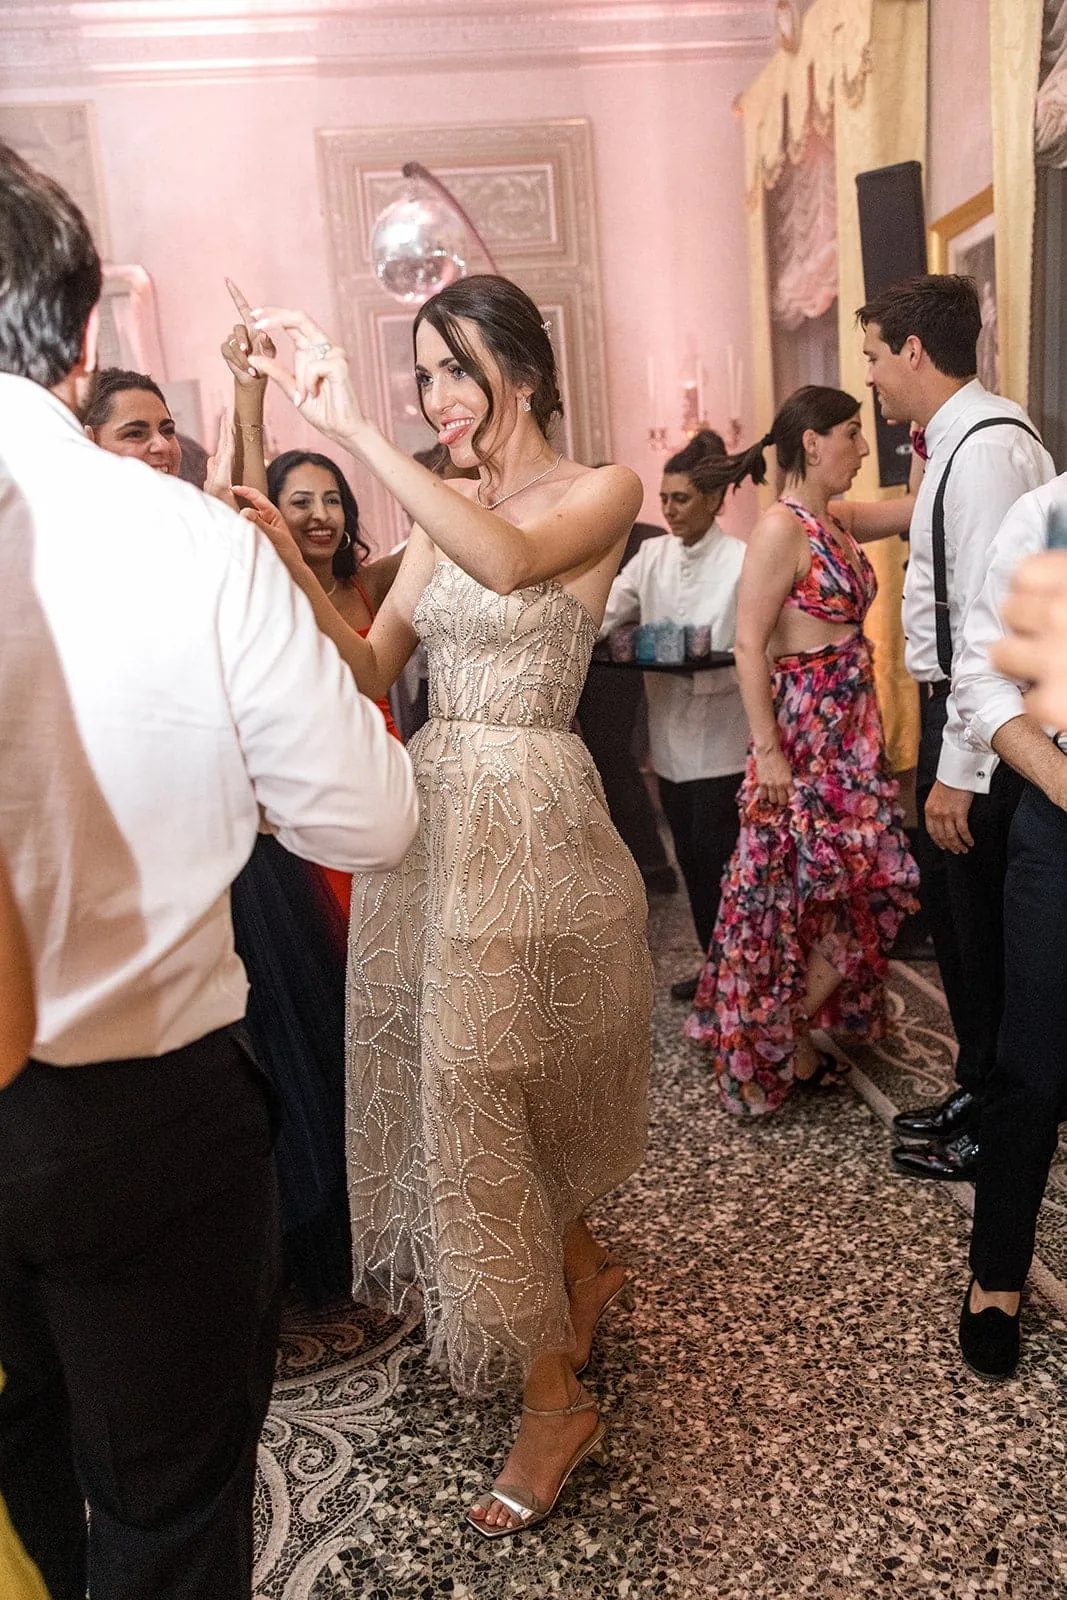 Fashion-Focused Villa Pizzo Wedding of the Year